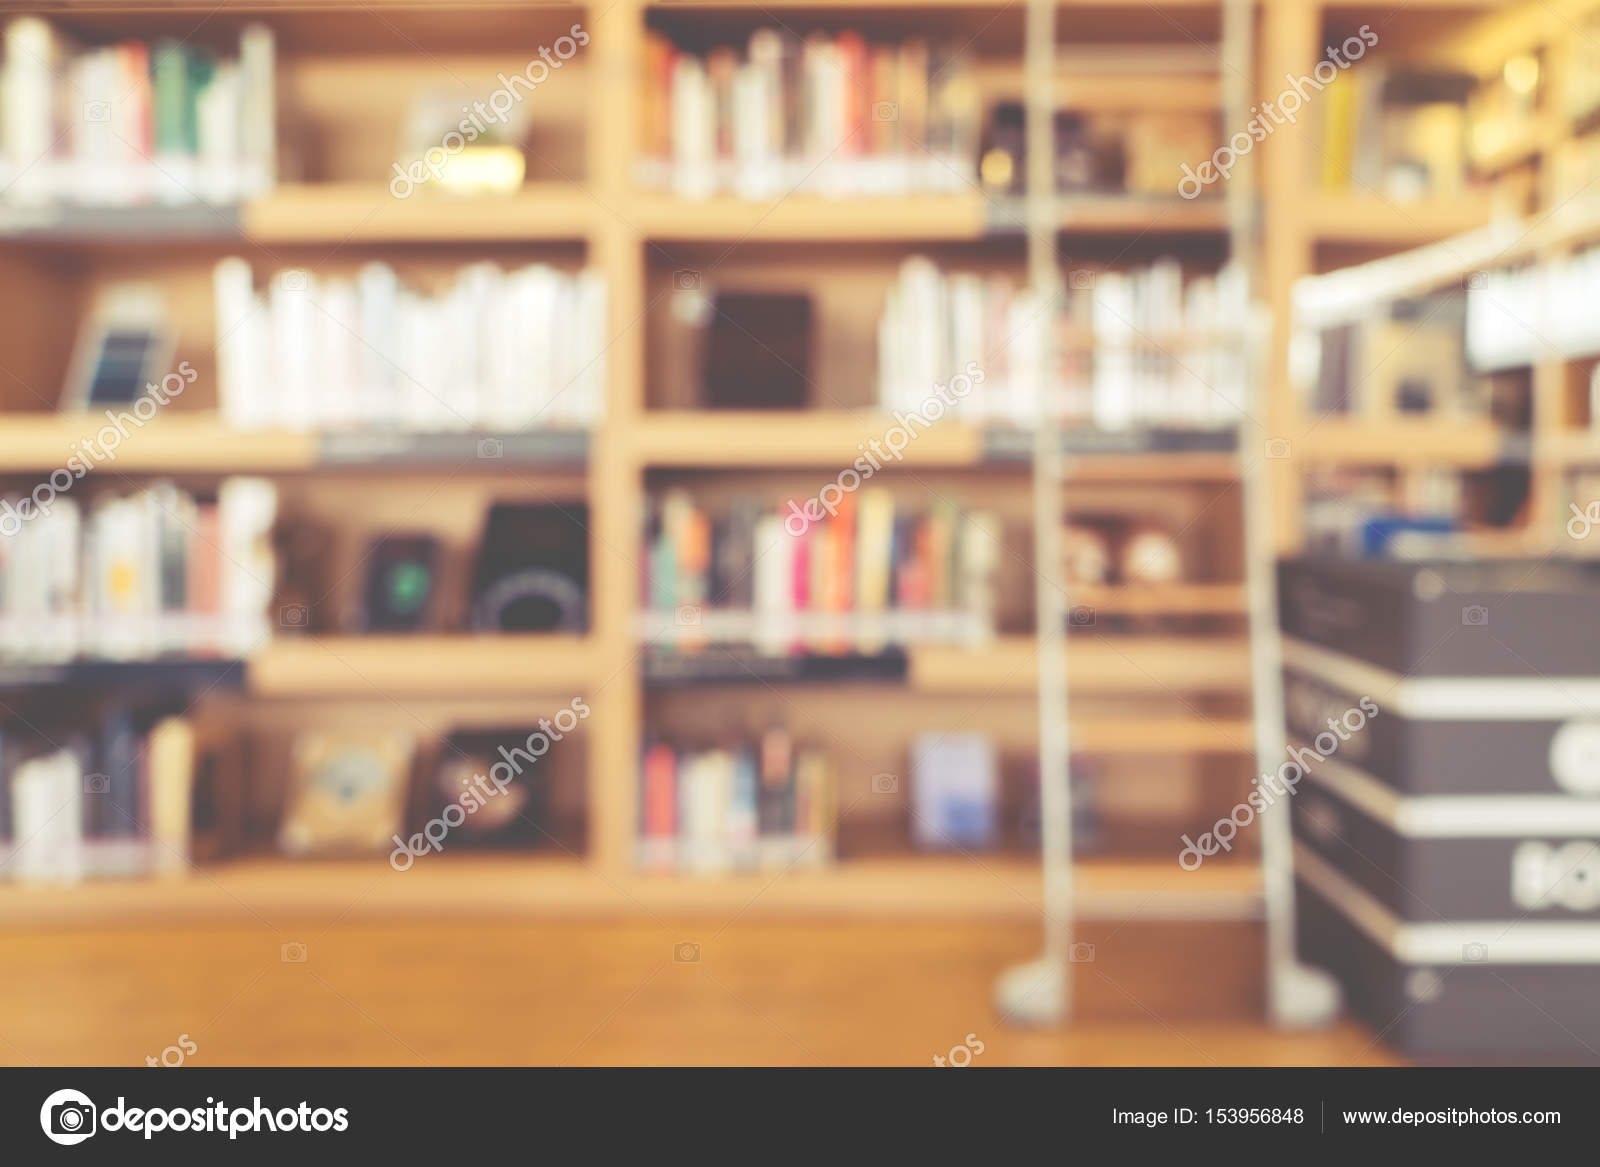 Blurred Bookshelf Background Stock Photo C Jakkapan 153956848